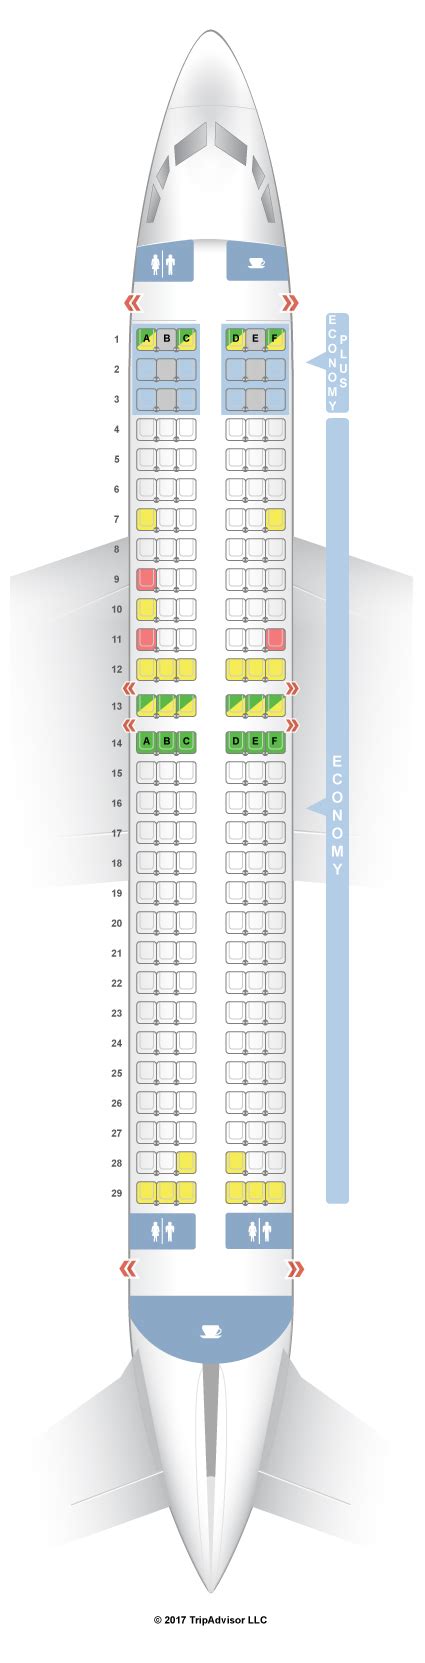 westjet seat map 737-800